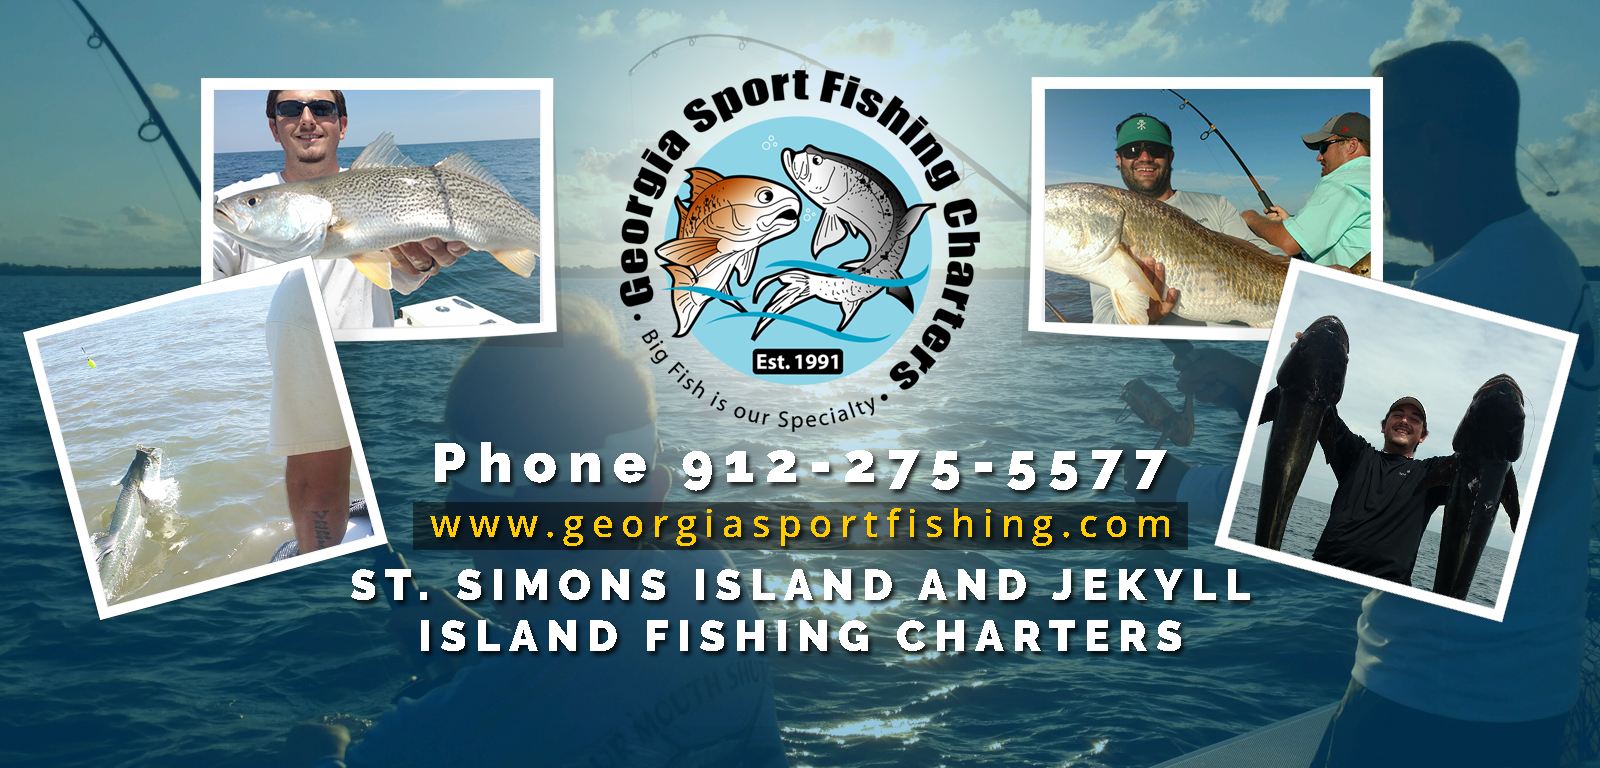 St. Simons and Jekyll Island Fishing Charters